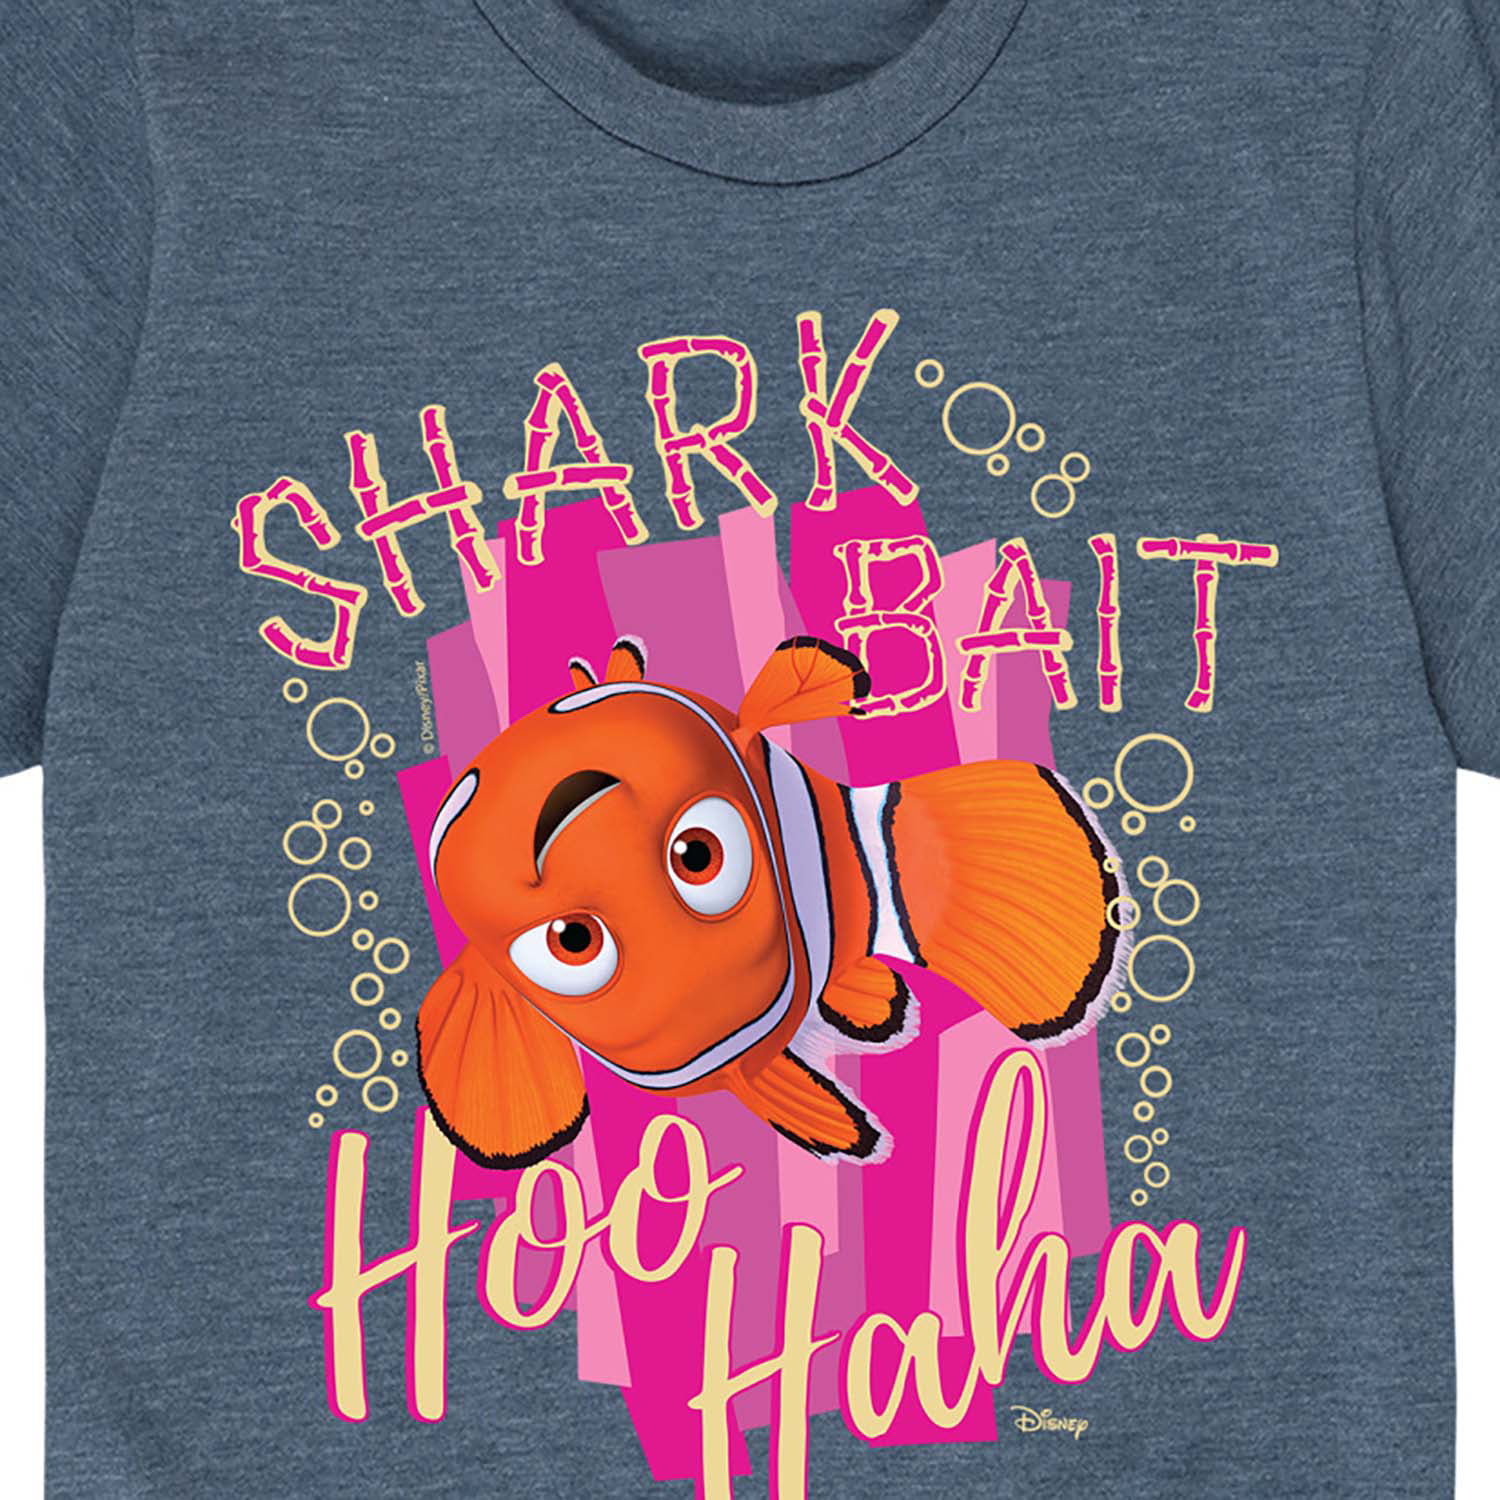 Finding Nemo - Shark Bait Hoo Haha - Toddler And Youth Short